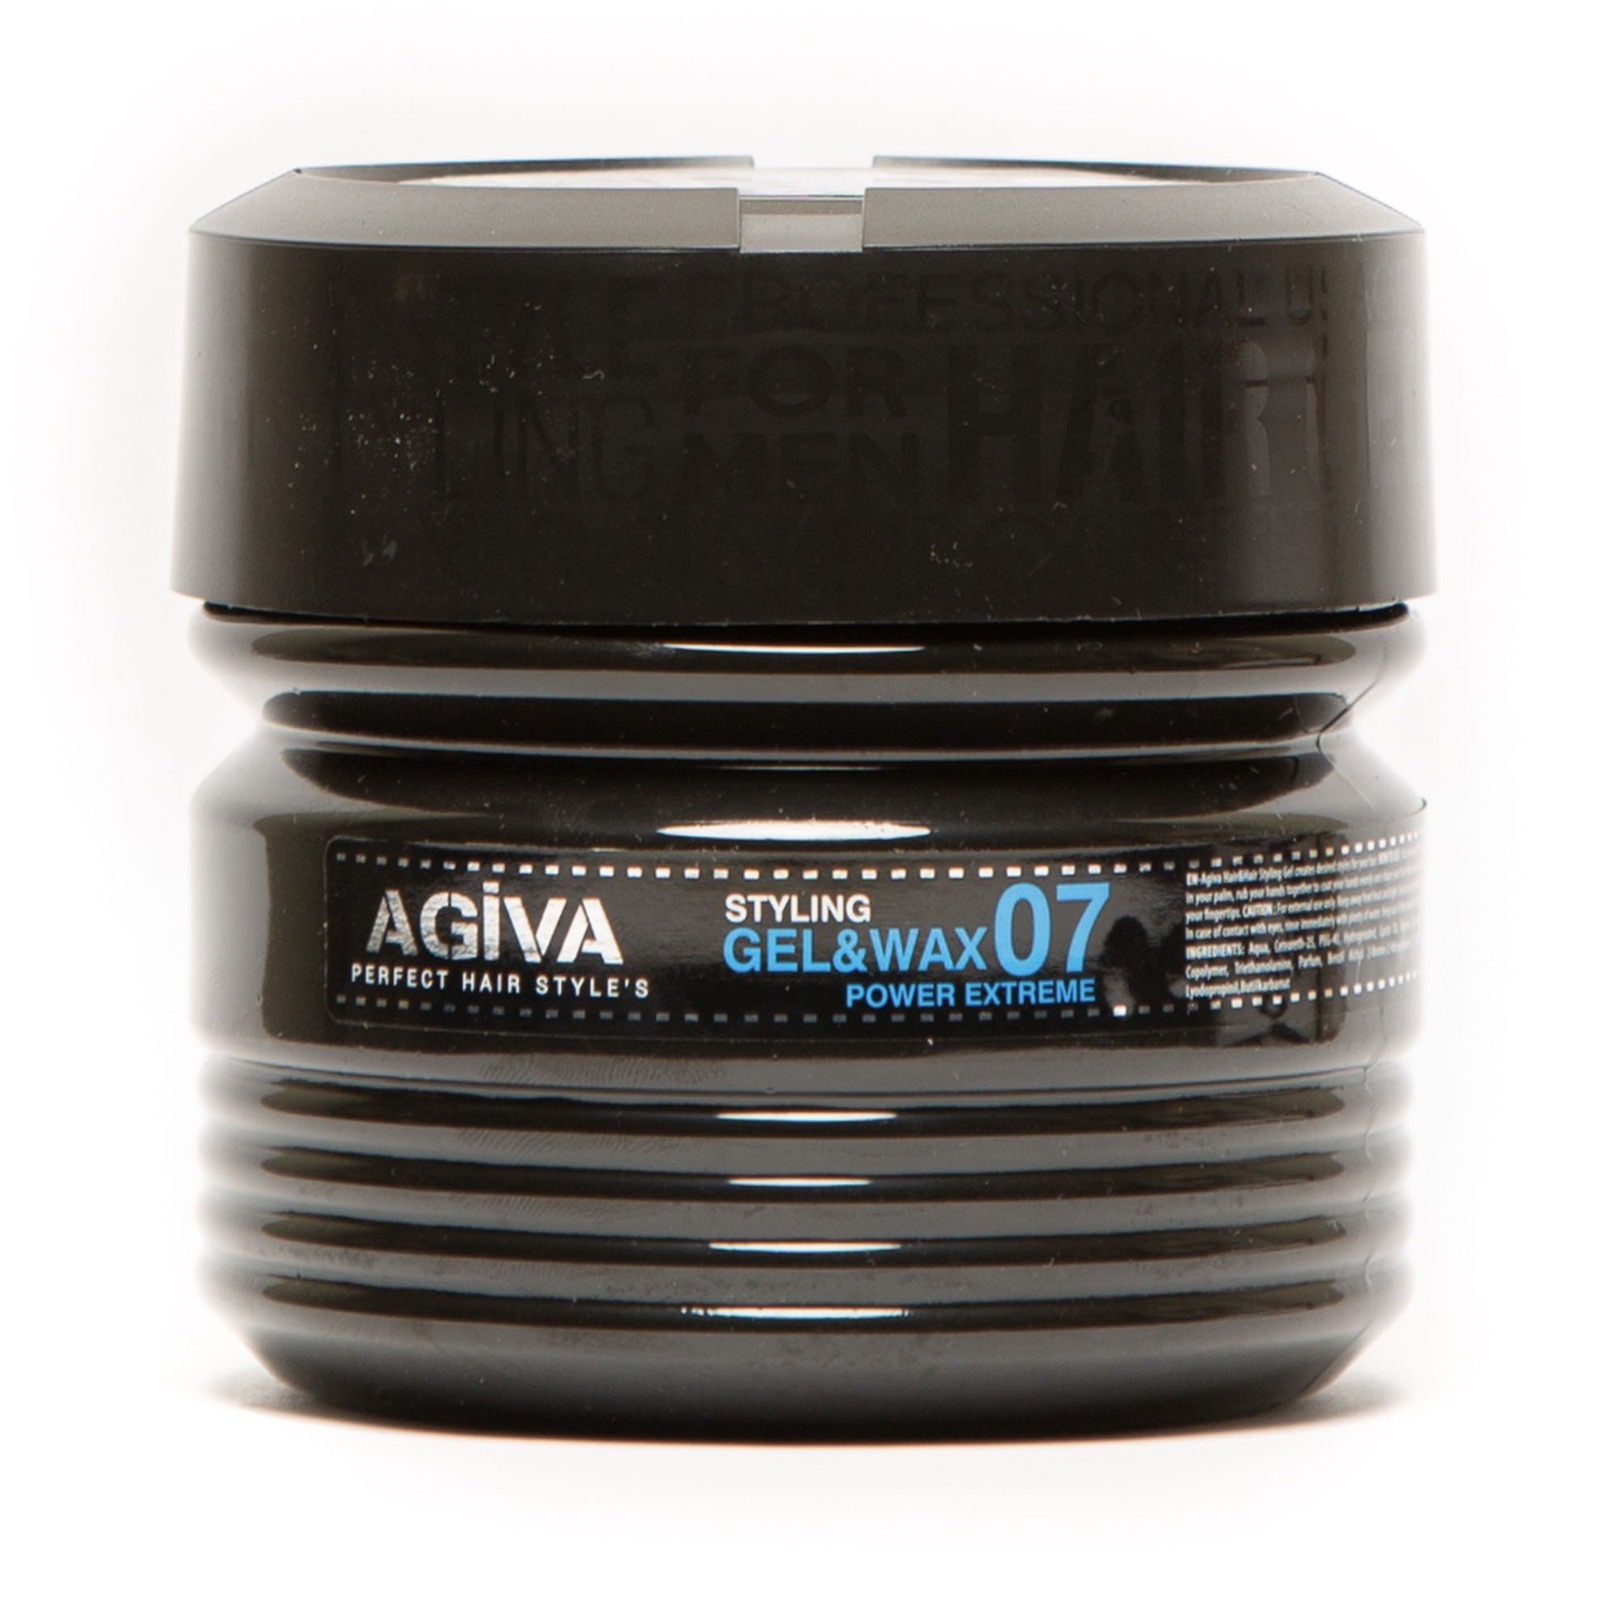 AGIVA Hair Styling Gel&Wax 07 Shiny Finish Extreme Power Hold 500 ml